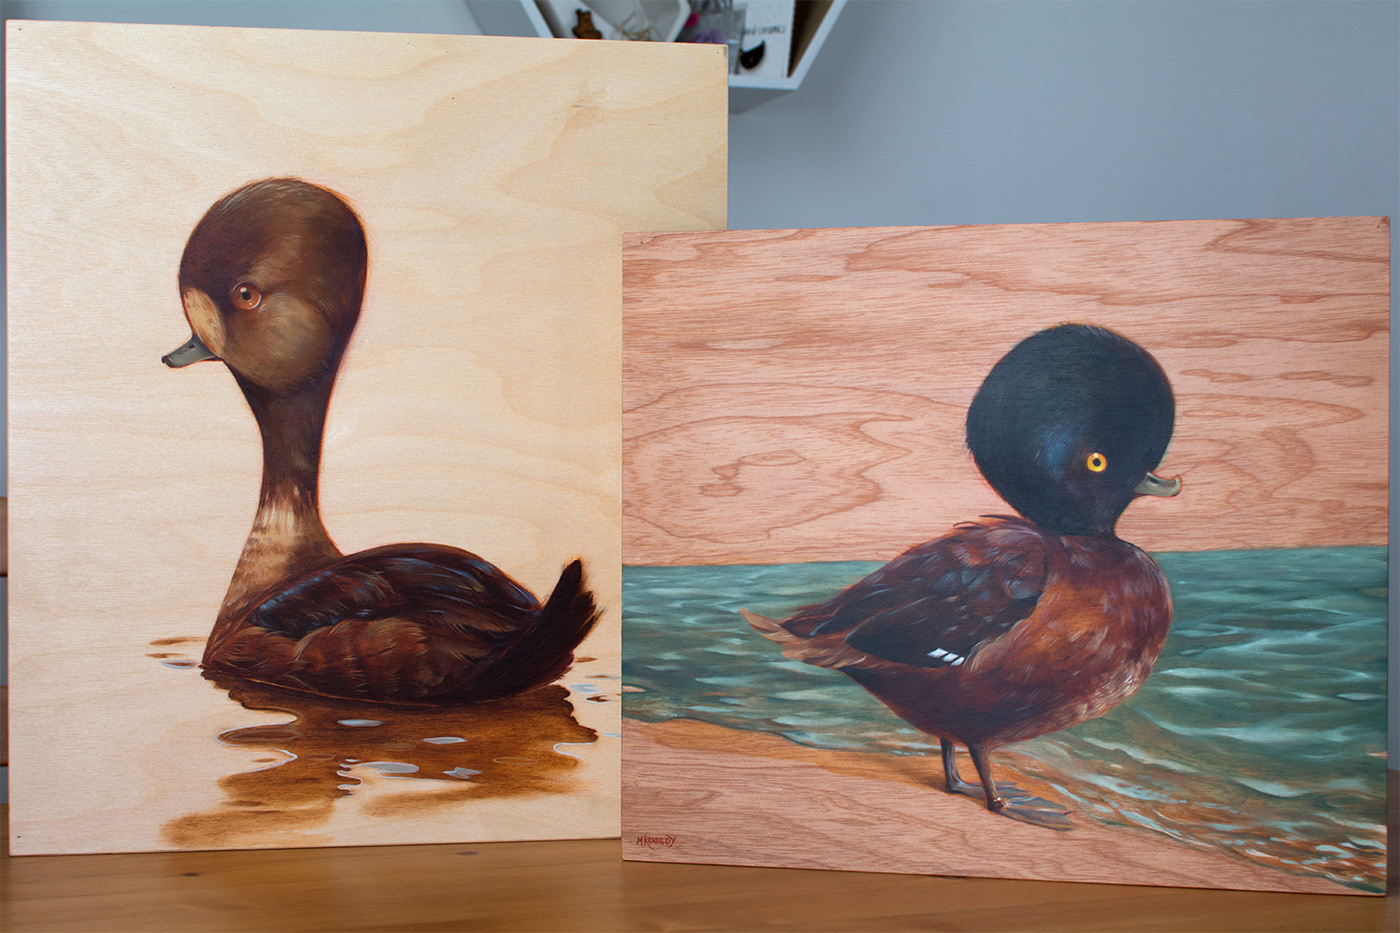 New Zealand wildlife ducks ducklings cute bizarre Paintings silly fluffy birds